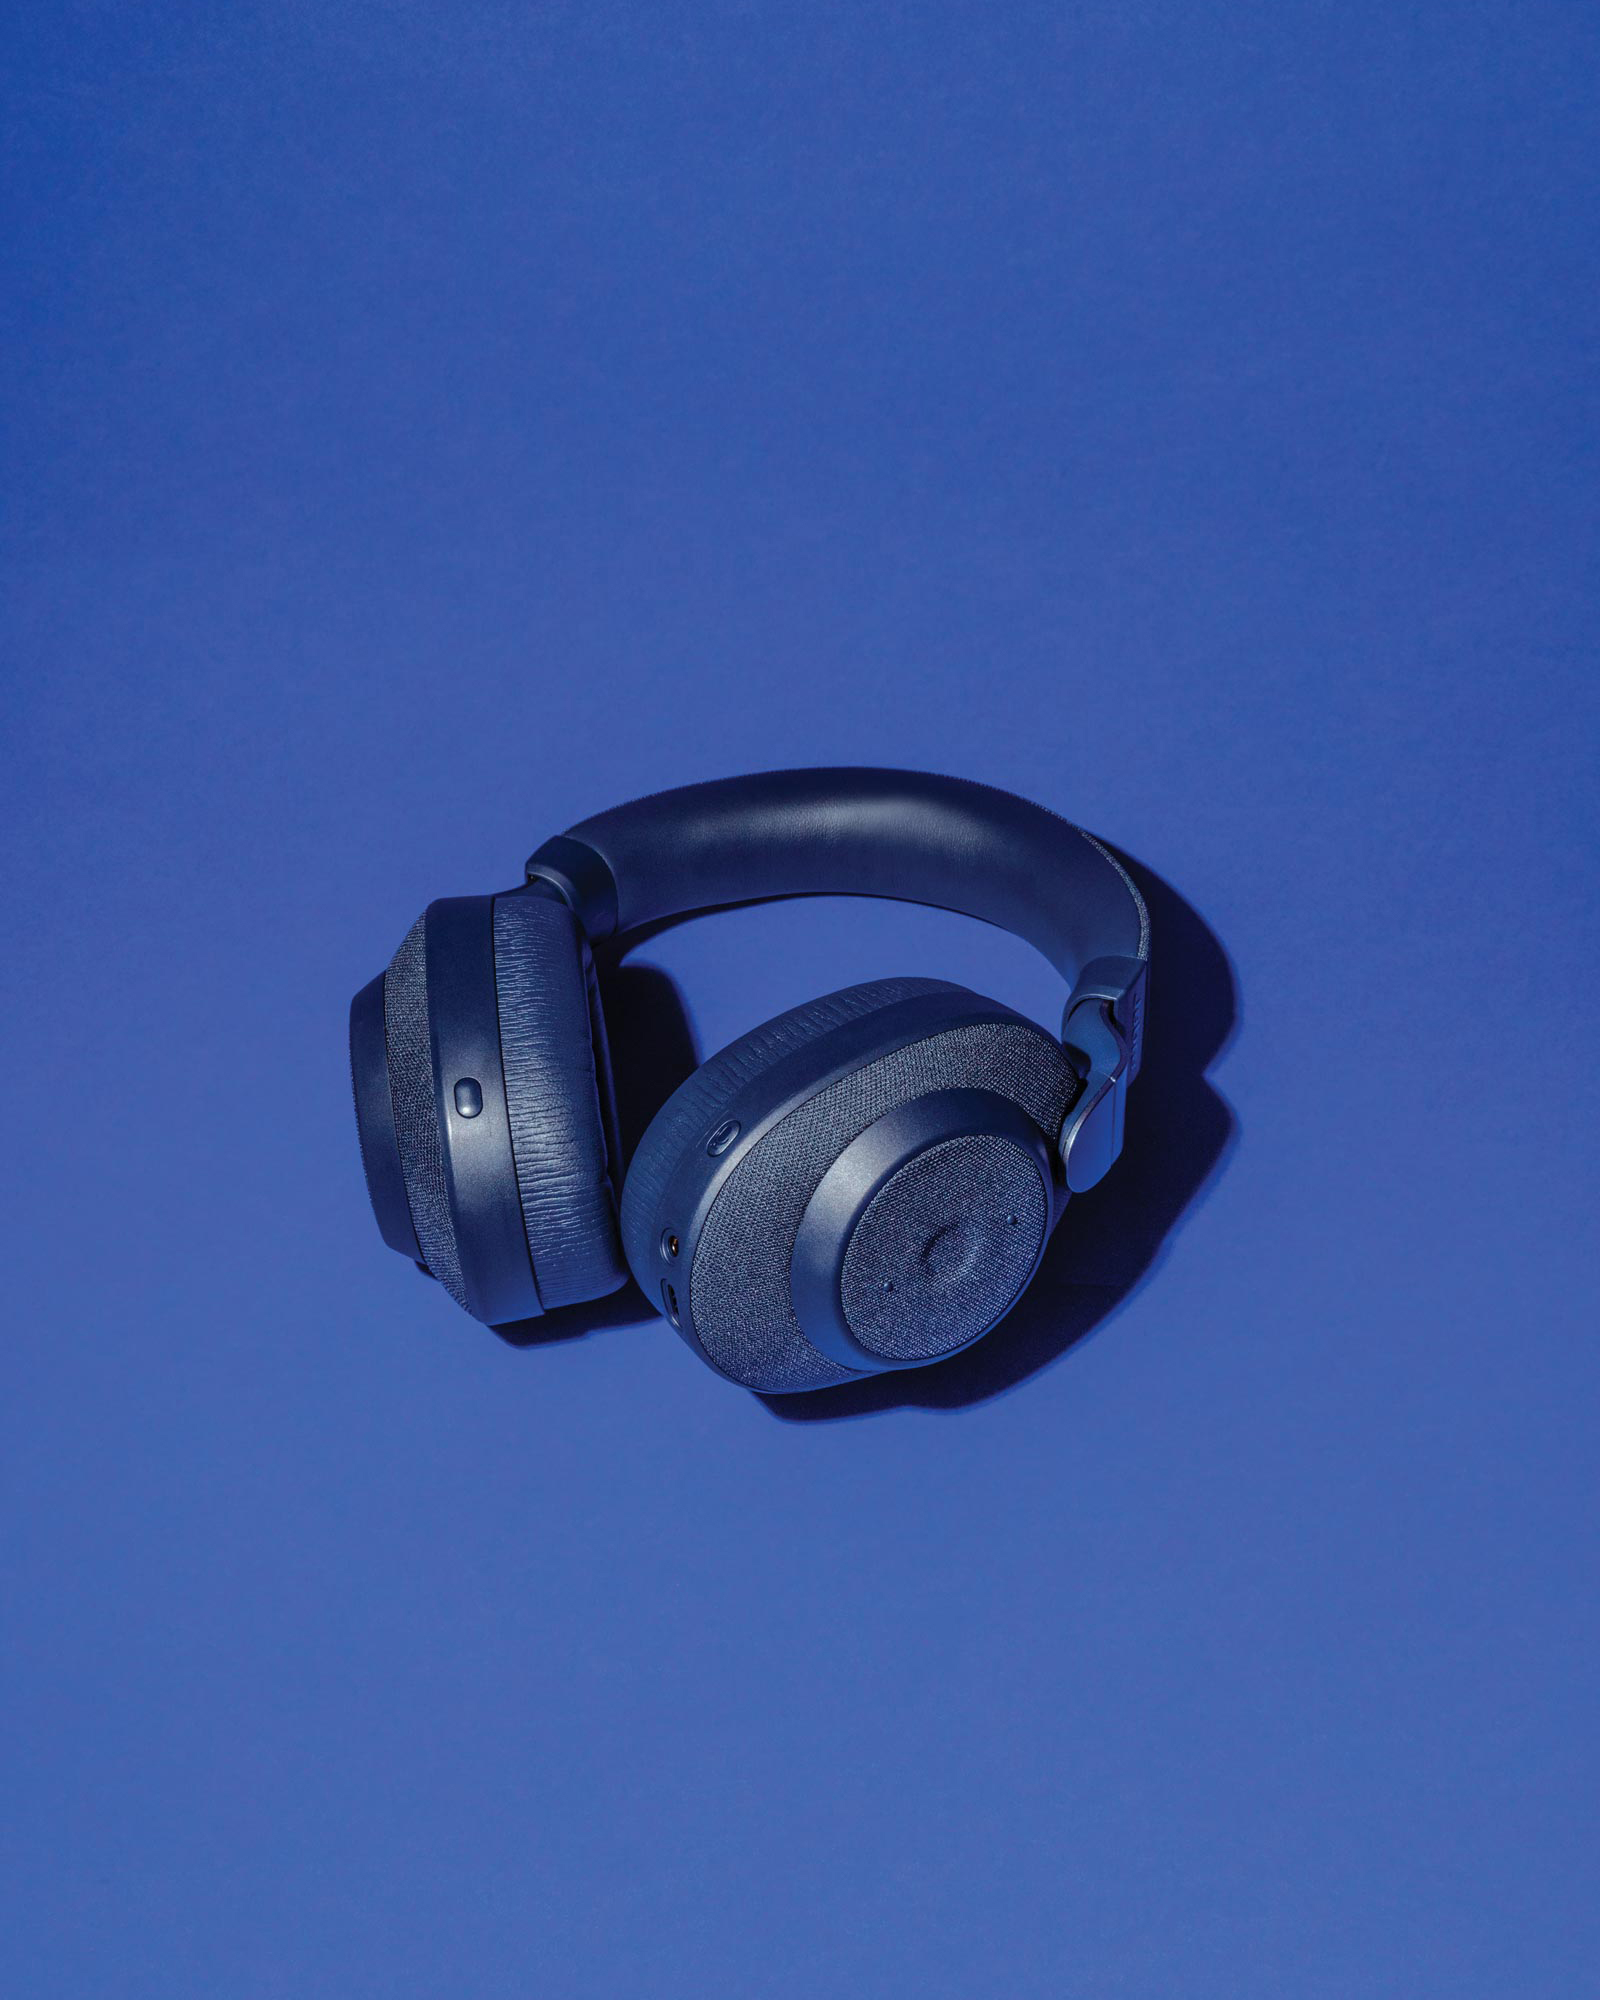 jabra elite 85h headphones sixtysix magazine